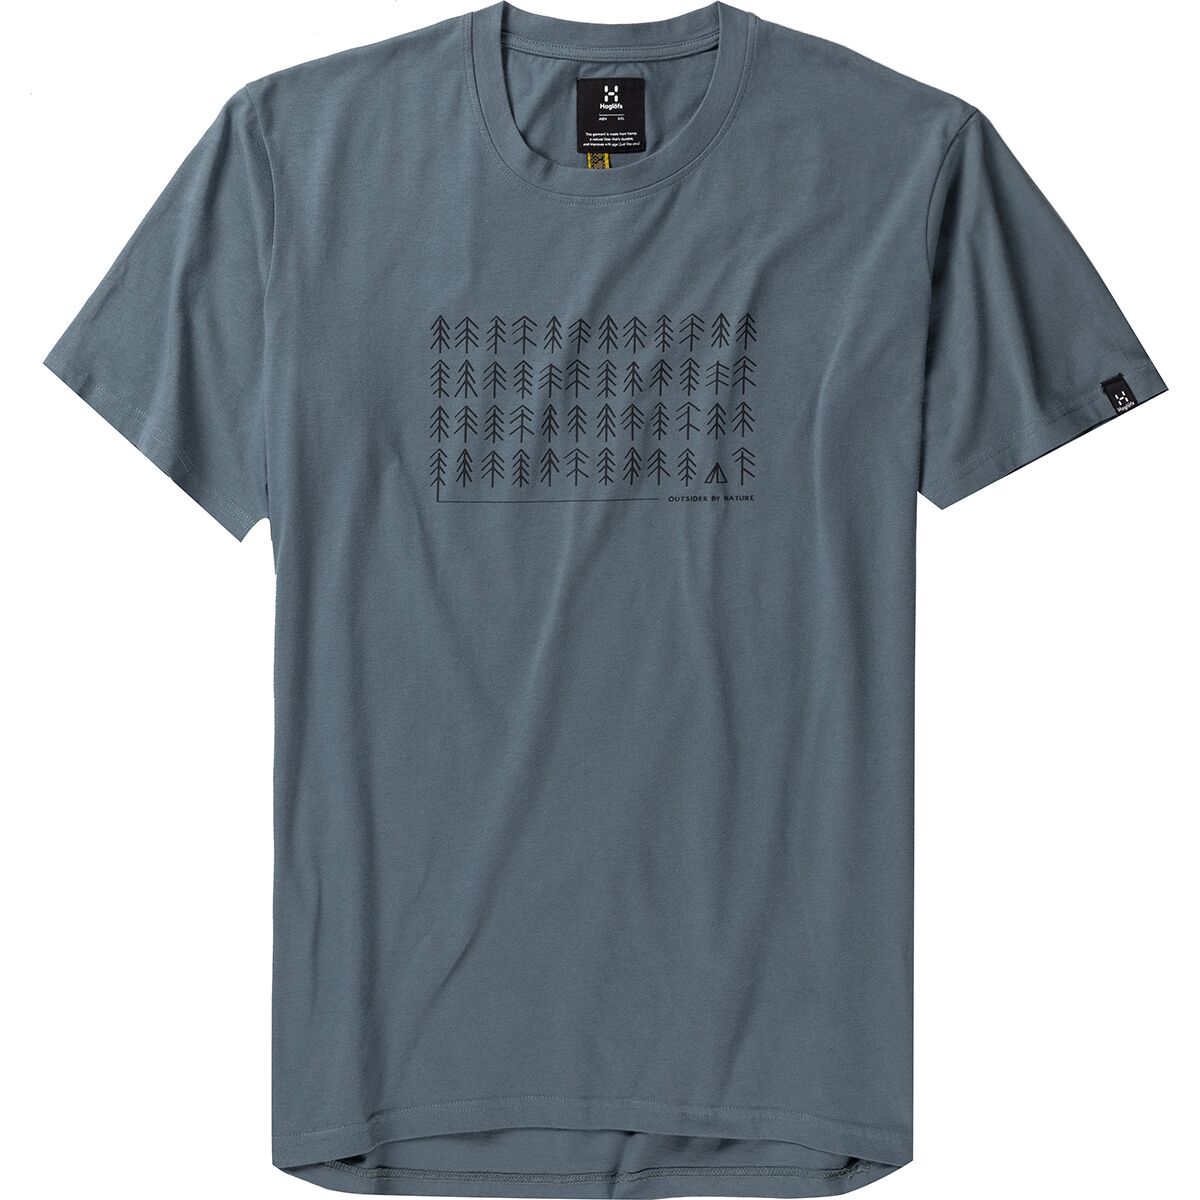 Haglofs Outsider By Nature Print T-Shirt - Men's